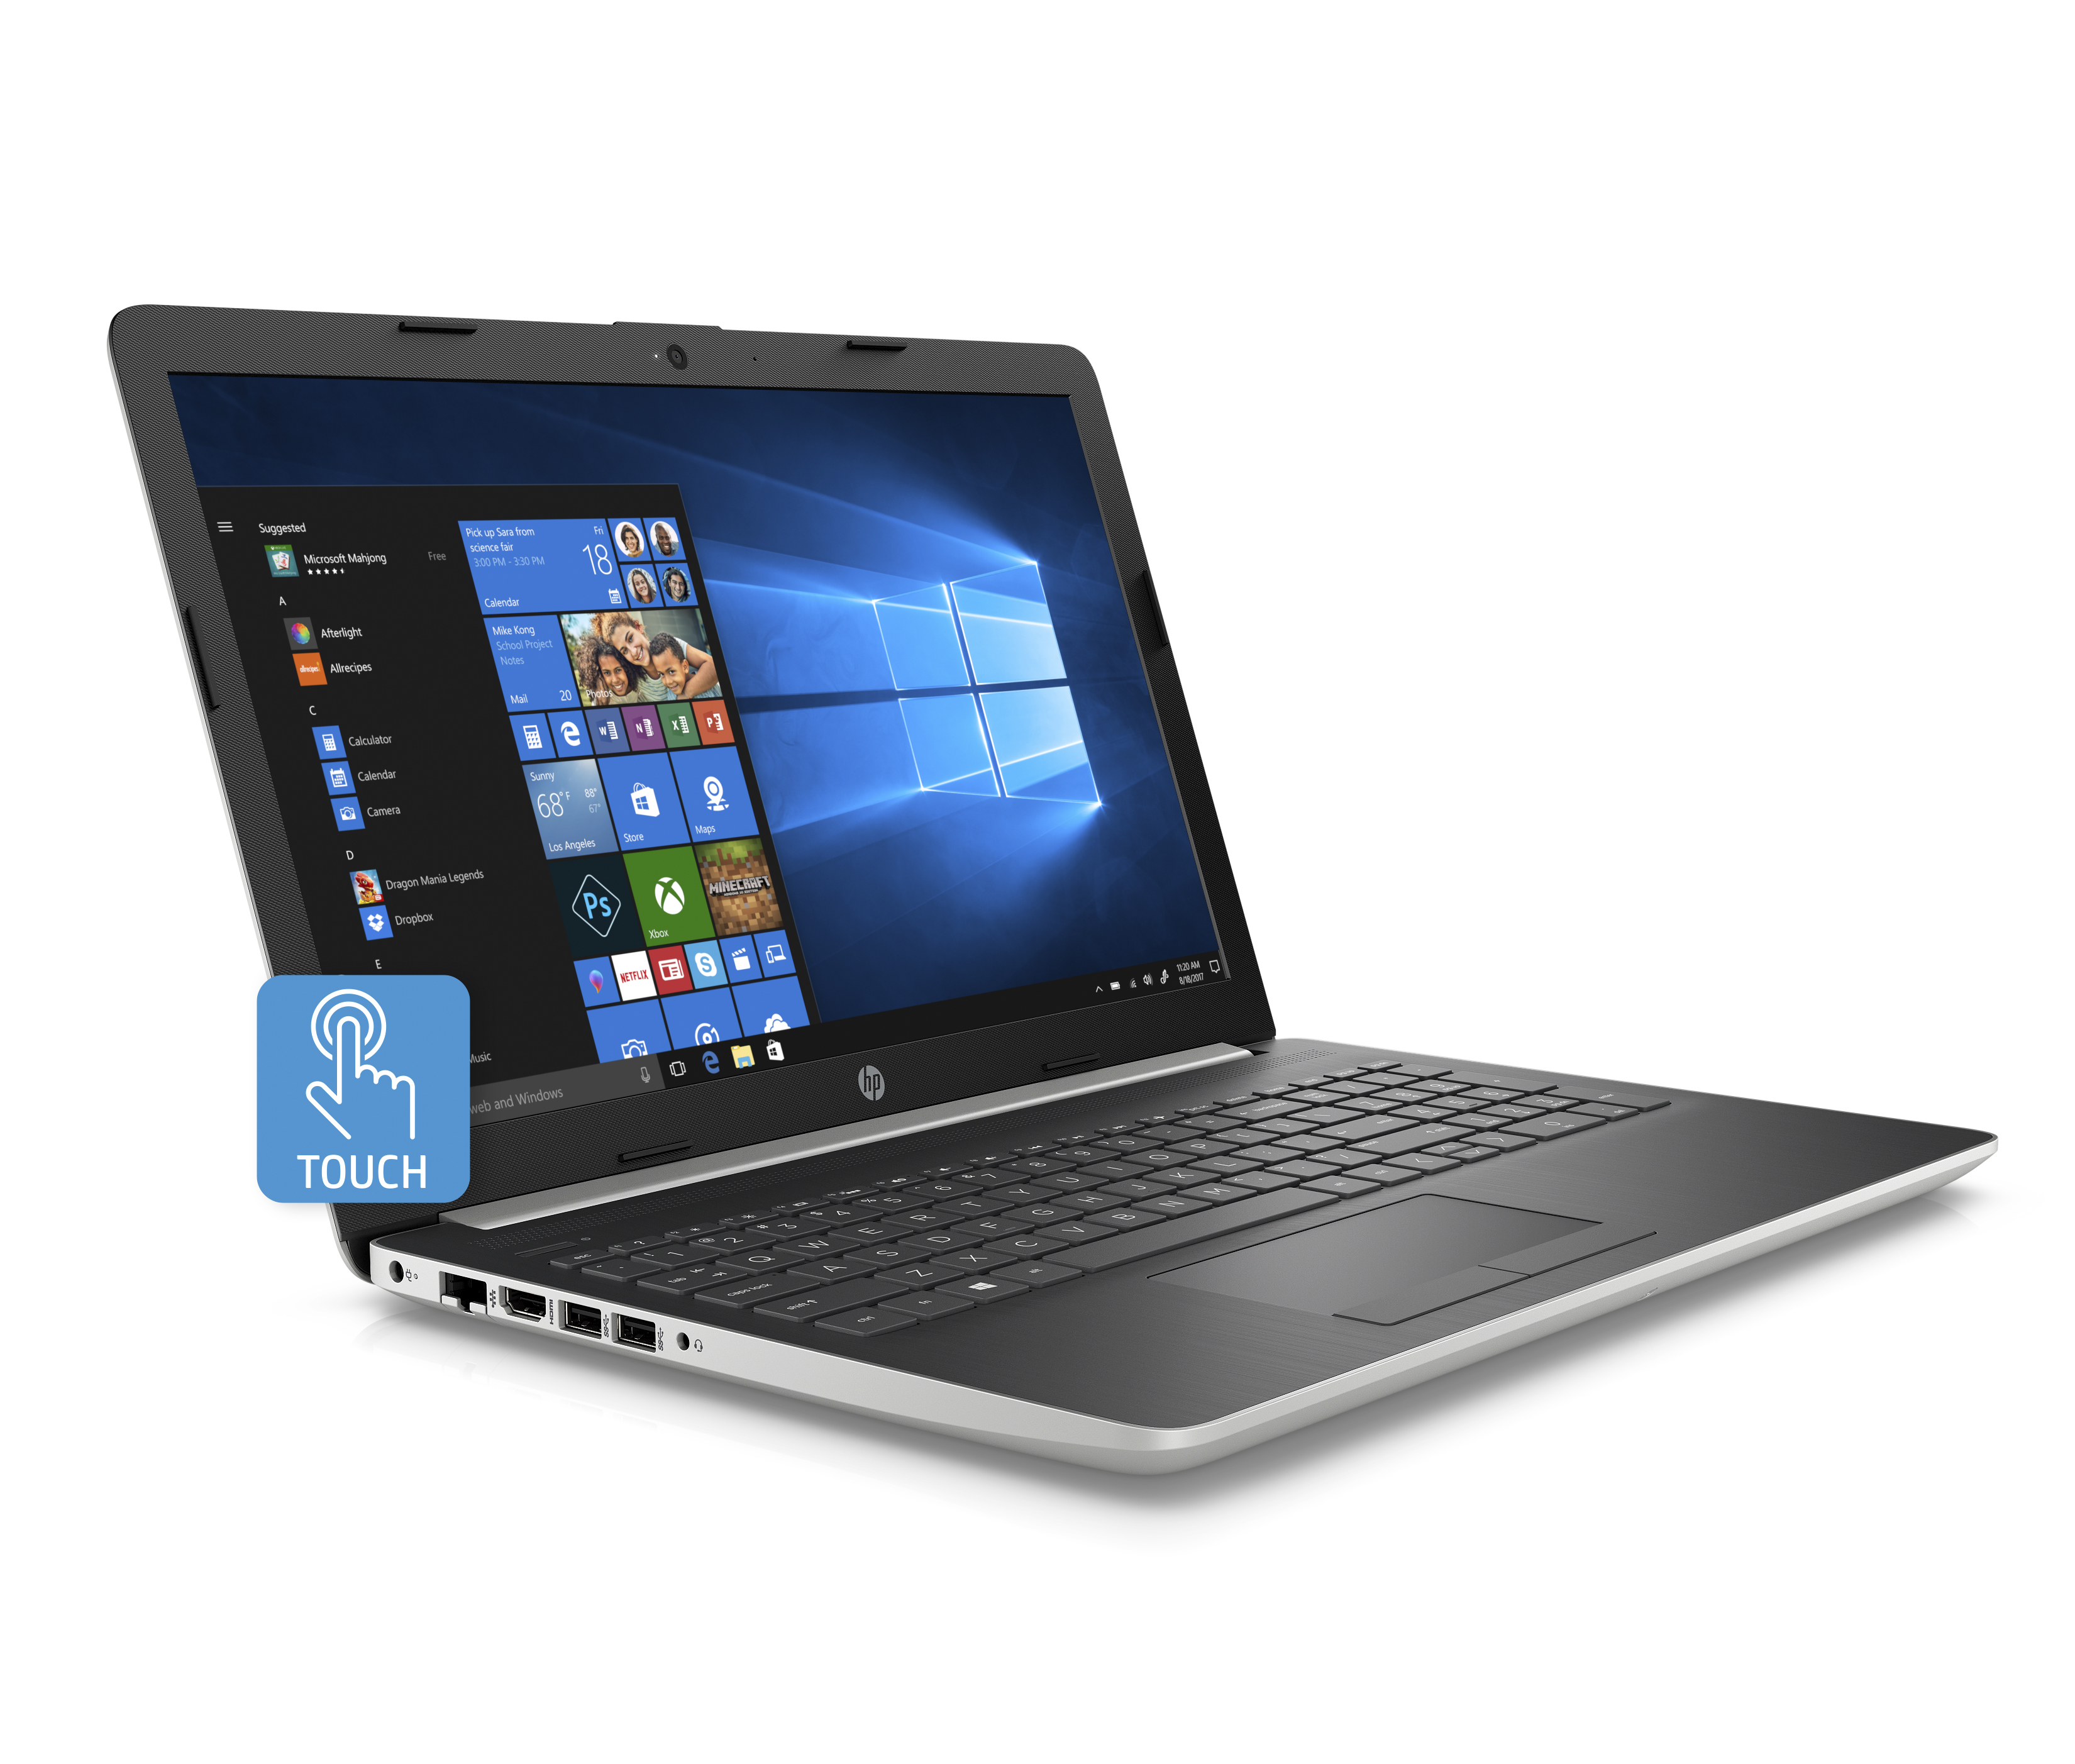 HP 15 Graphite Mist Laptop Touchscreen, Intel Core i5-8250U, 1TB HDD + 16GB Intel Optane memory, 4GB SDRAM, DVD, 15-da0053wm - image 4 of 9